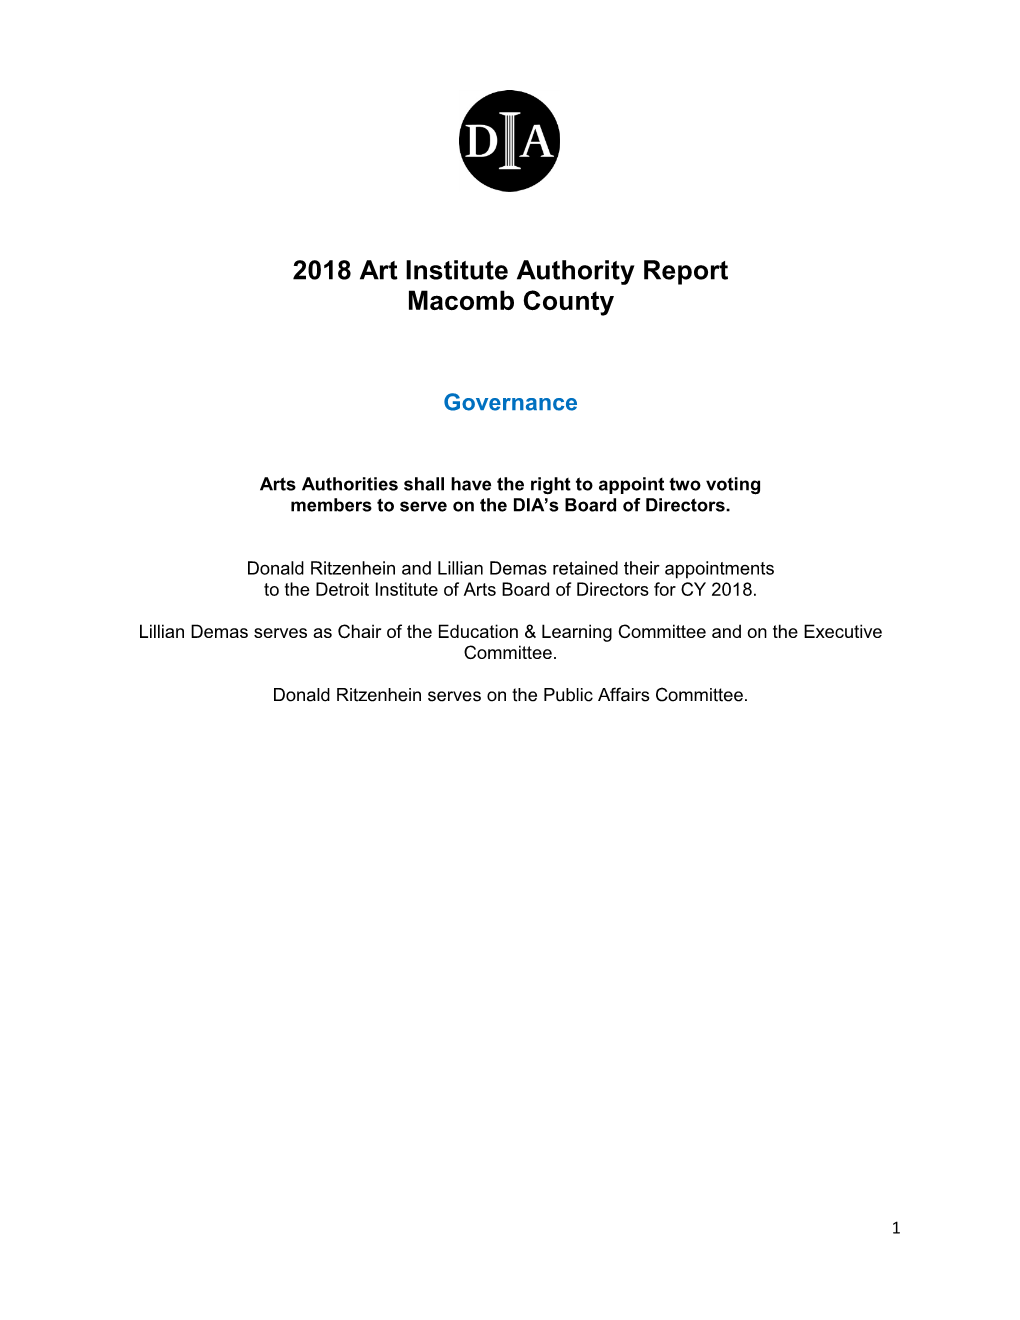 2018 Art Institute Authority Report Macomb County